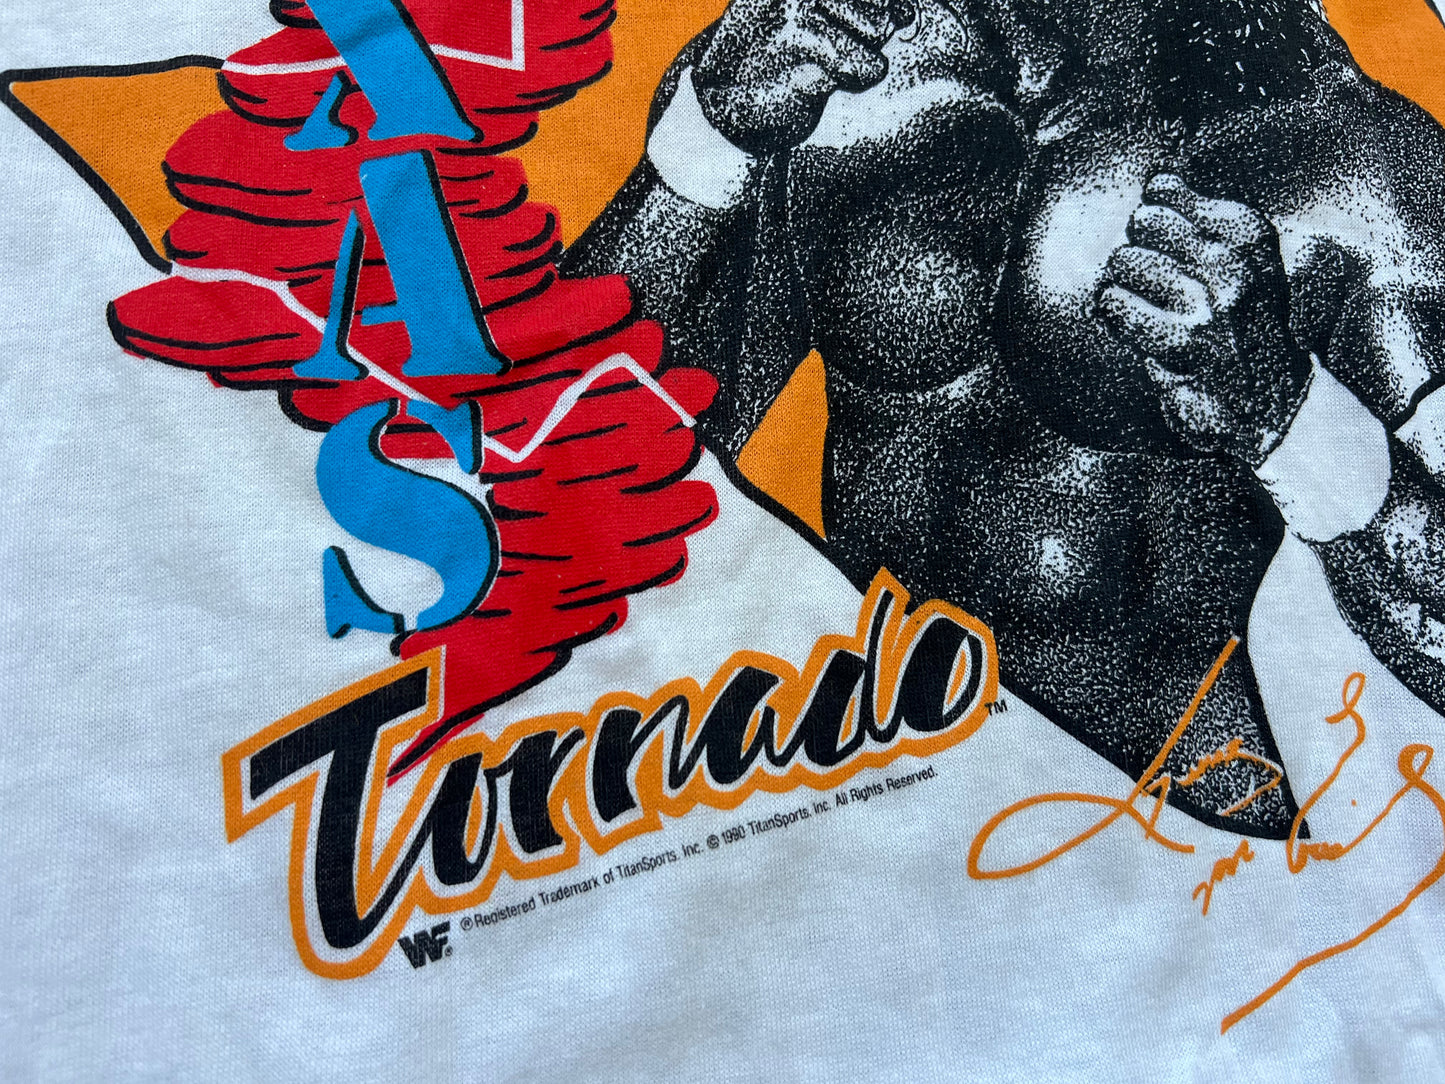 1990 WWF “The Texas Tornado” Kerry Von Erich shirt